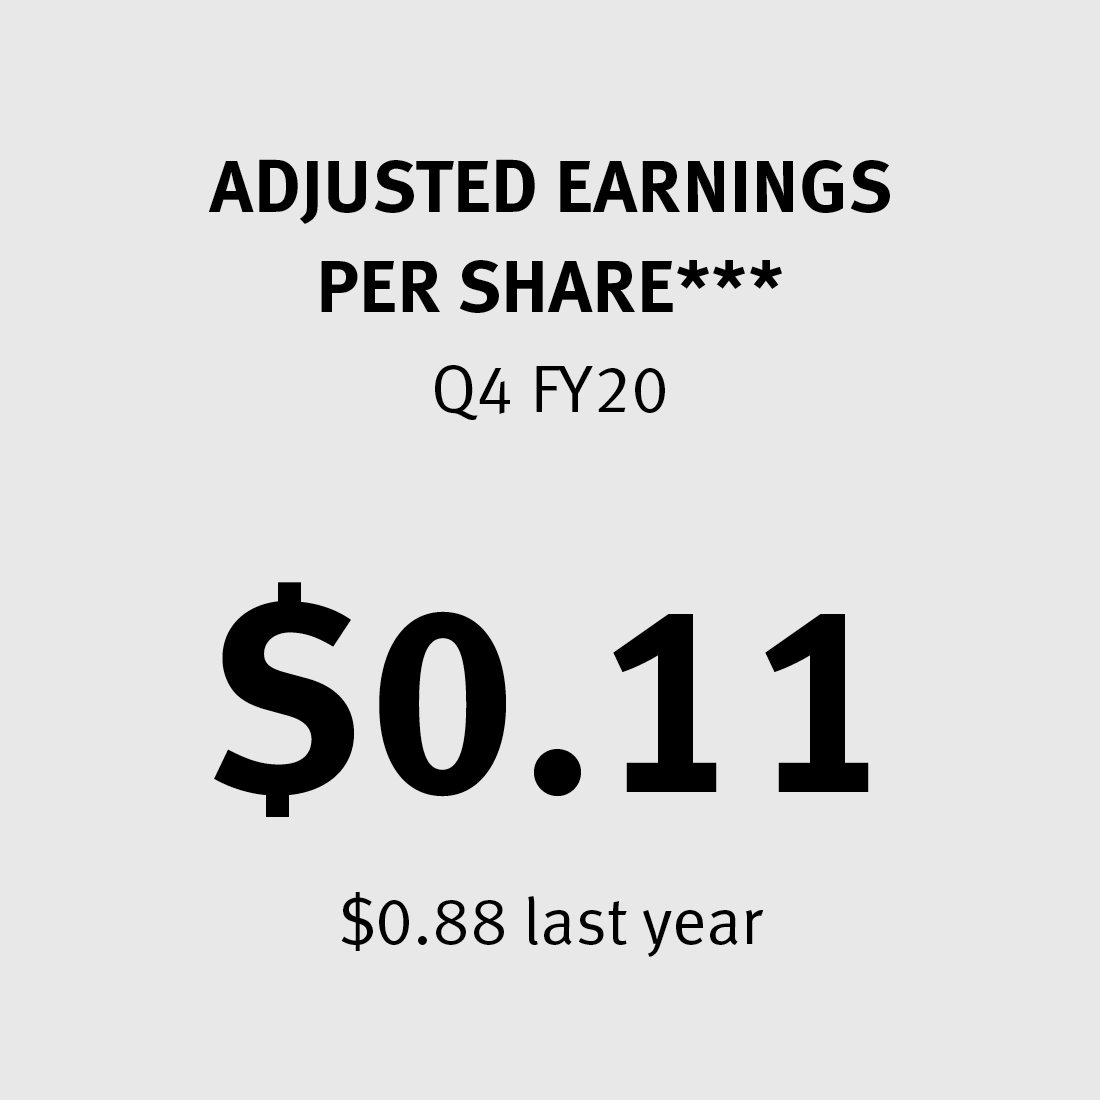 Adjusted Earnings per Share $0.11 ($0.88 last year)***